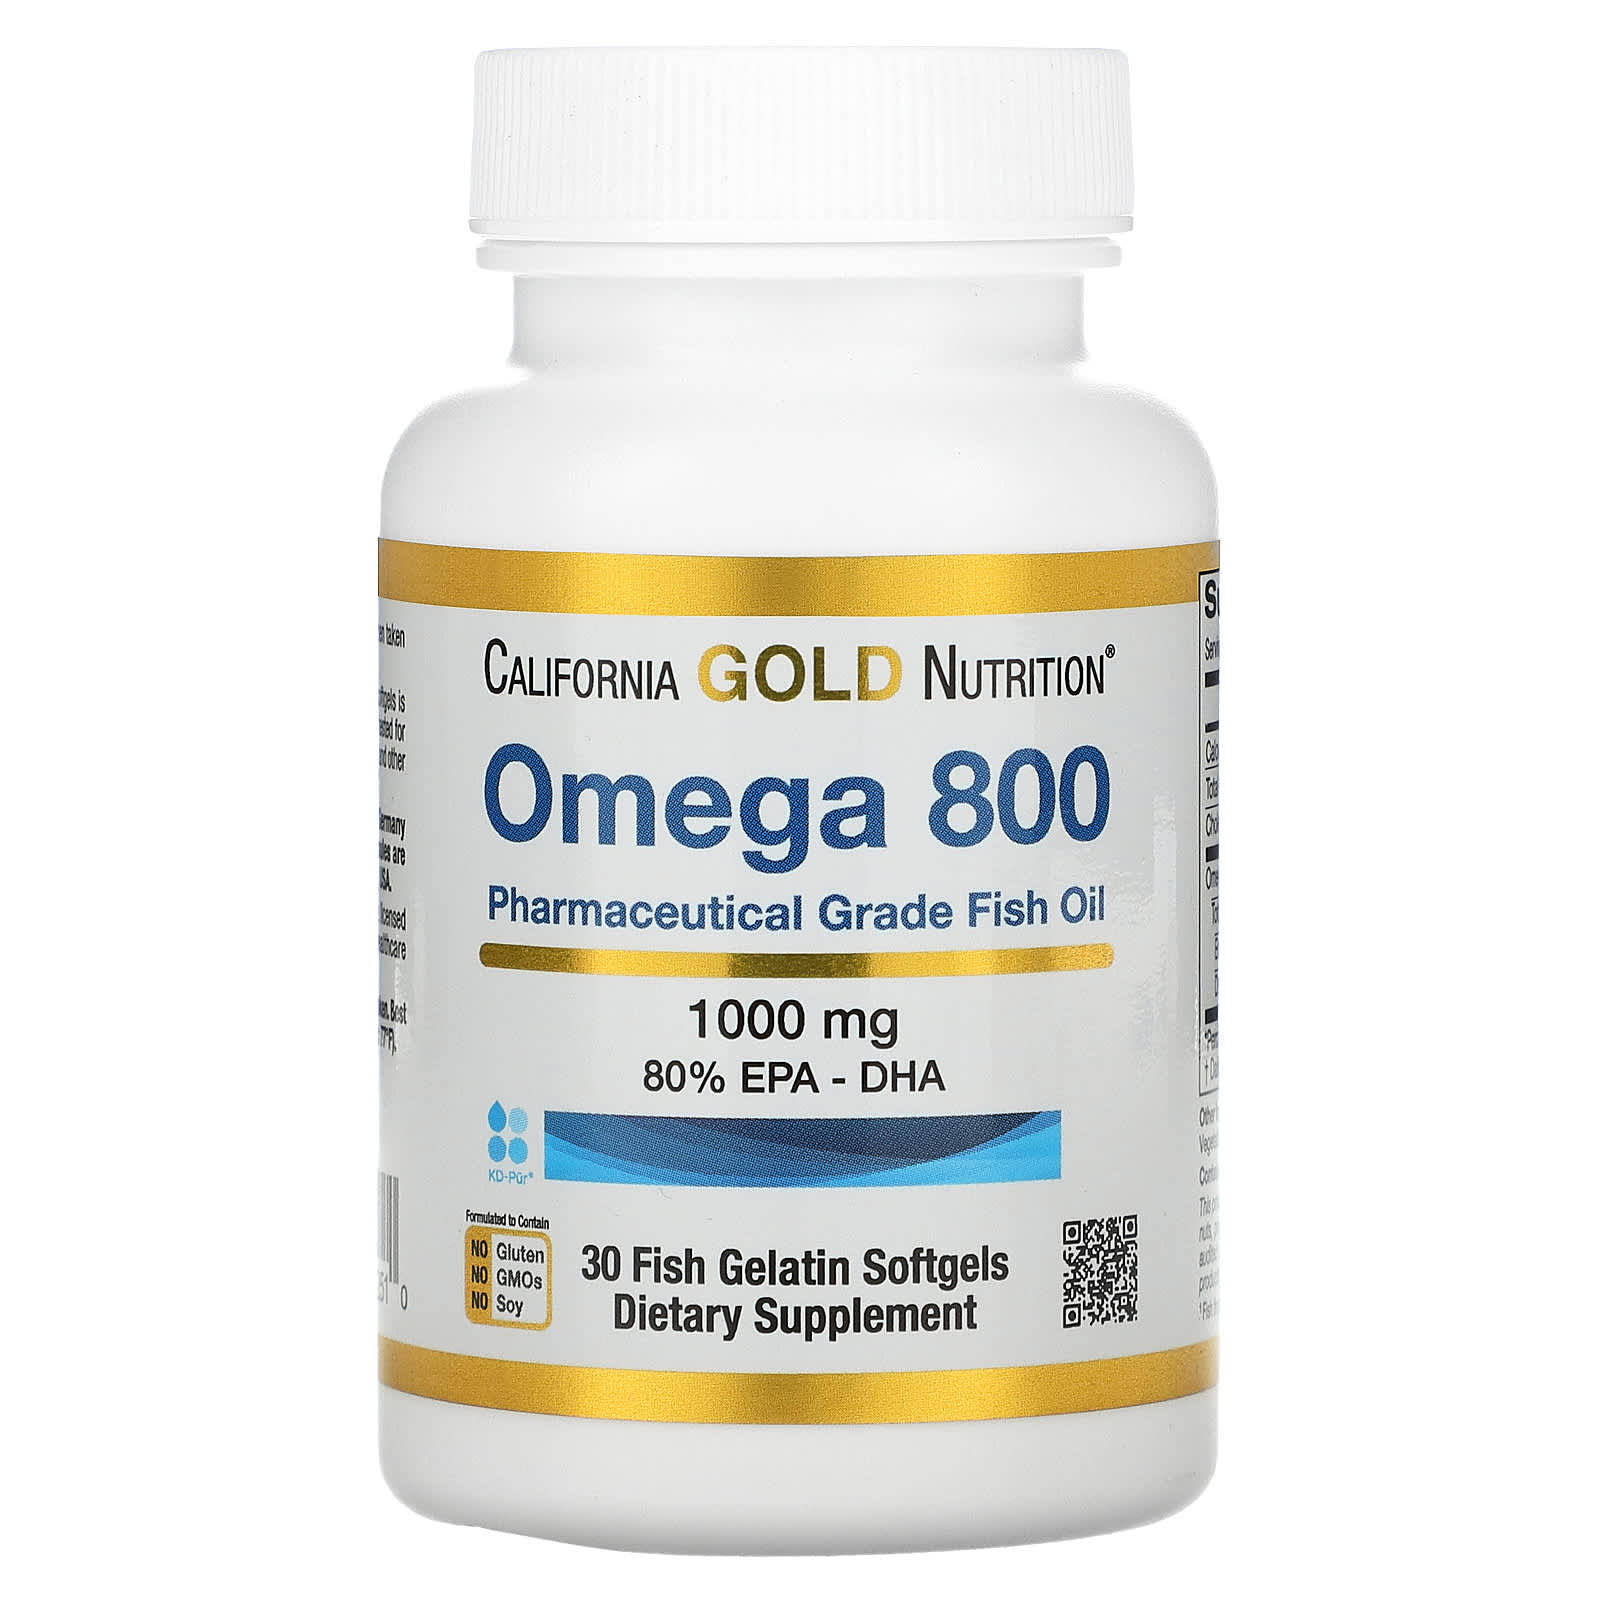 Omega 800 Pharmaceutical Grade Fish Oil - 80% EPA/DHA - Triglyceride Form - 1000 mg - 30 Fish Gelatin Softgels - California Gold Nutrition